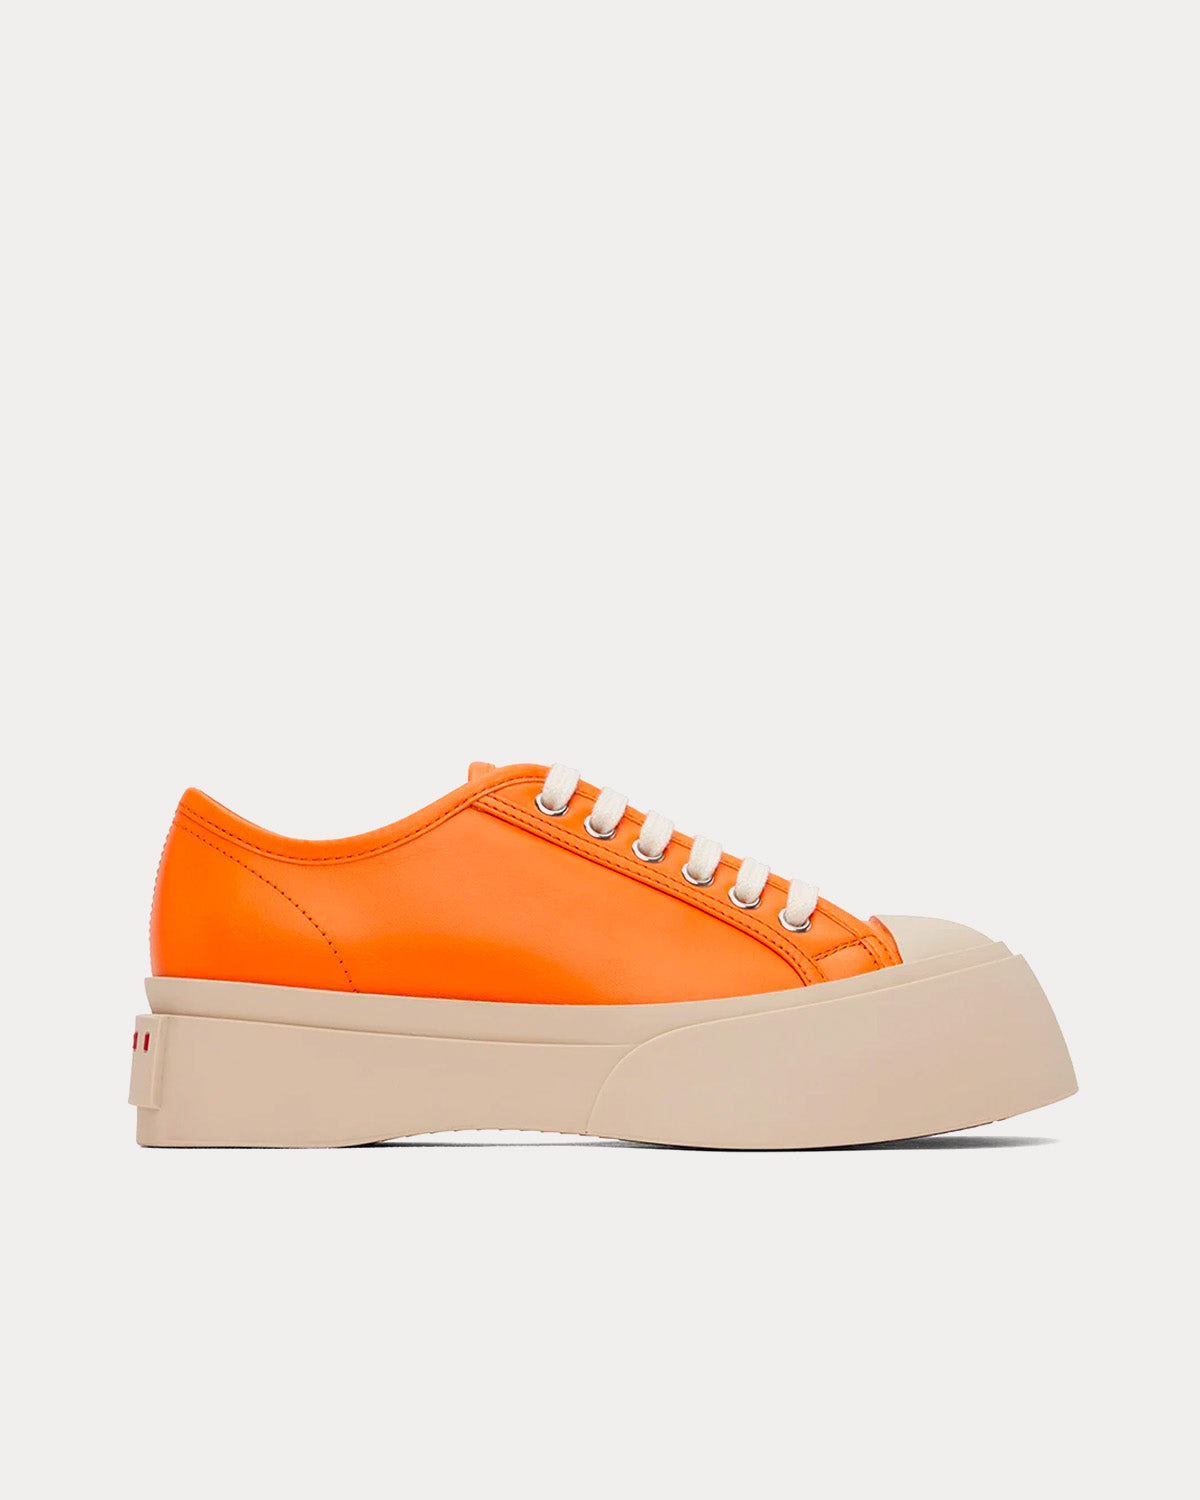 Marni - Pablo Leather Orange Low Top Sneakers